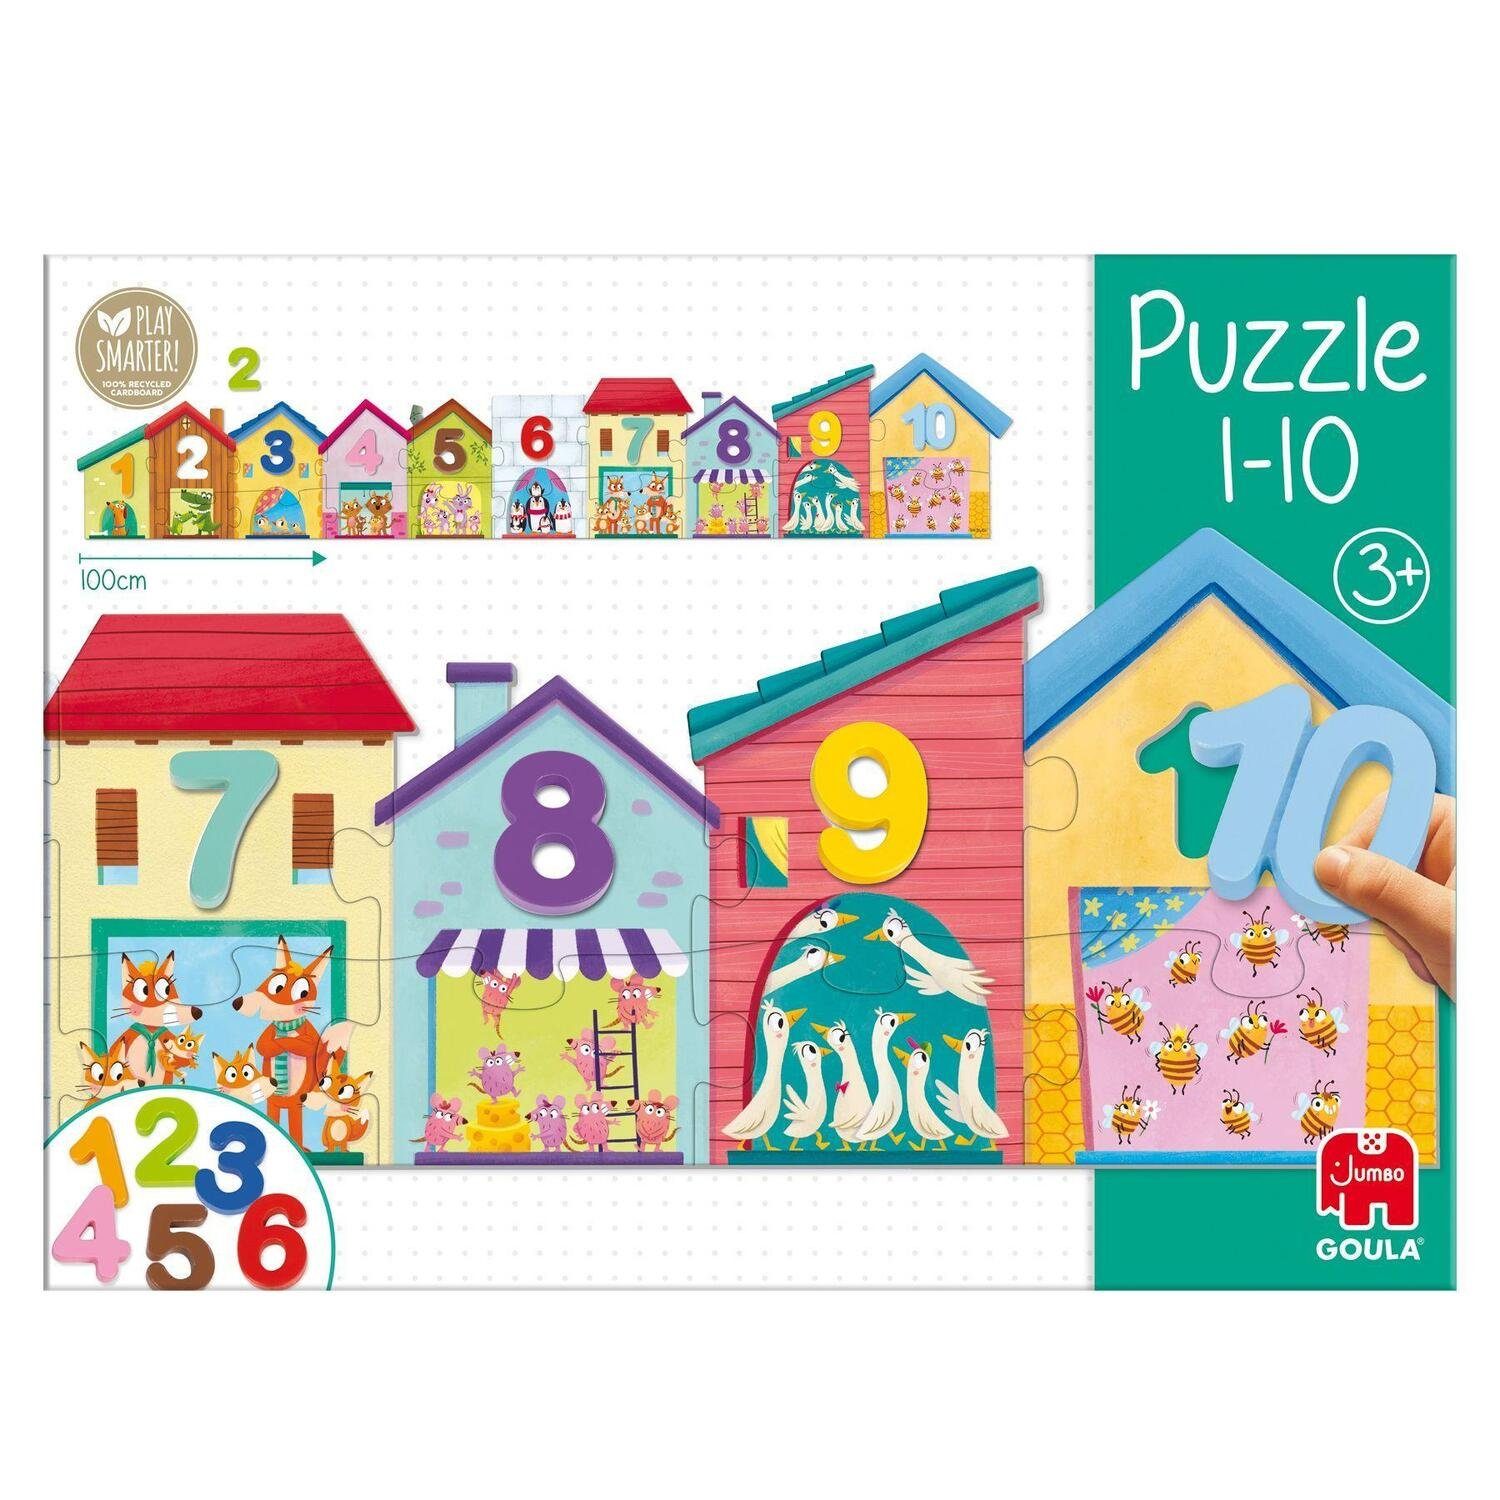 Jumbo Spiele Puzzle 1-10 Puzzle, Puzzleteile GOULA